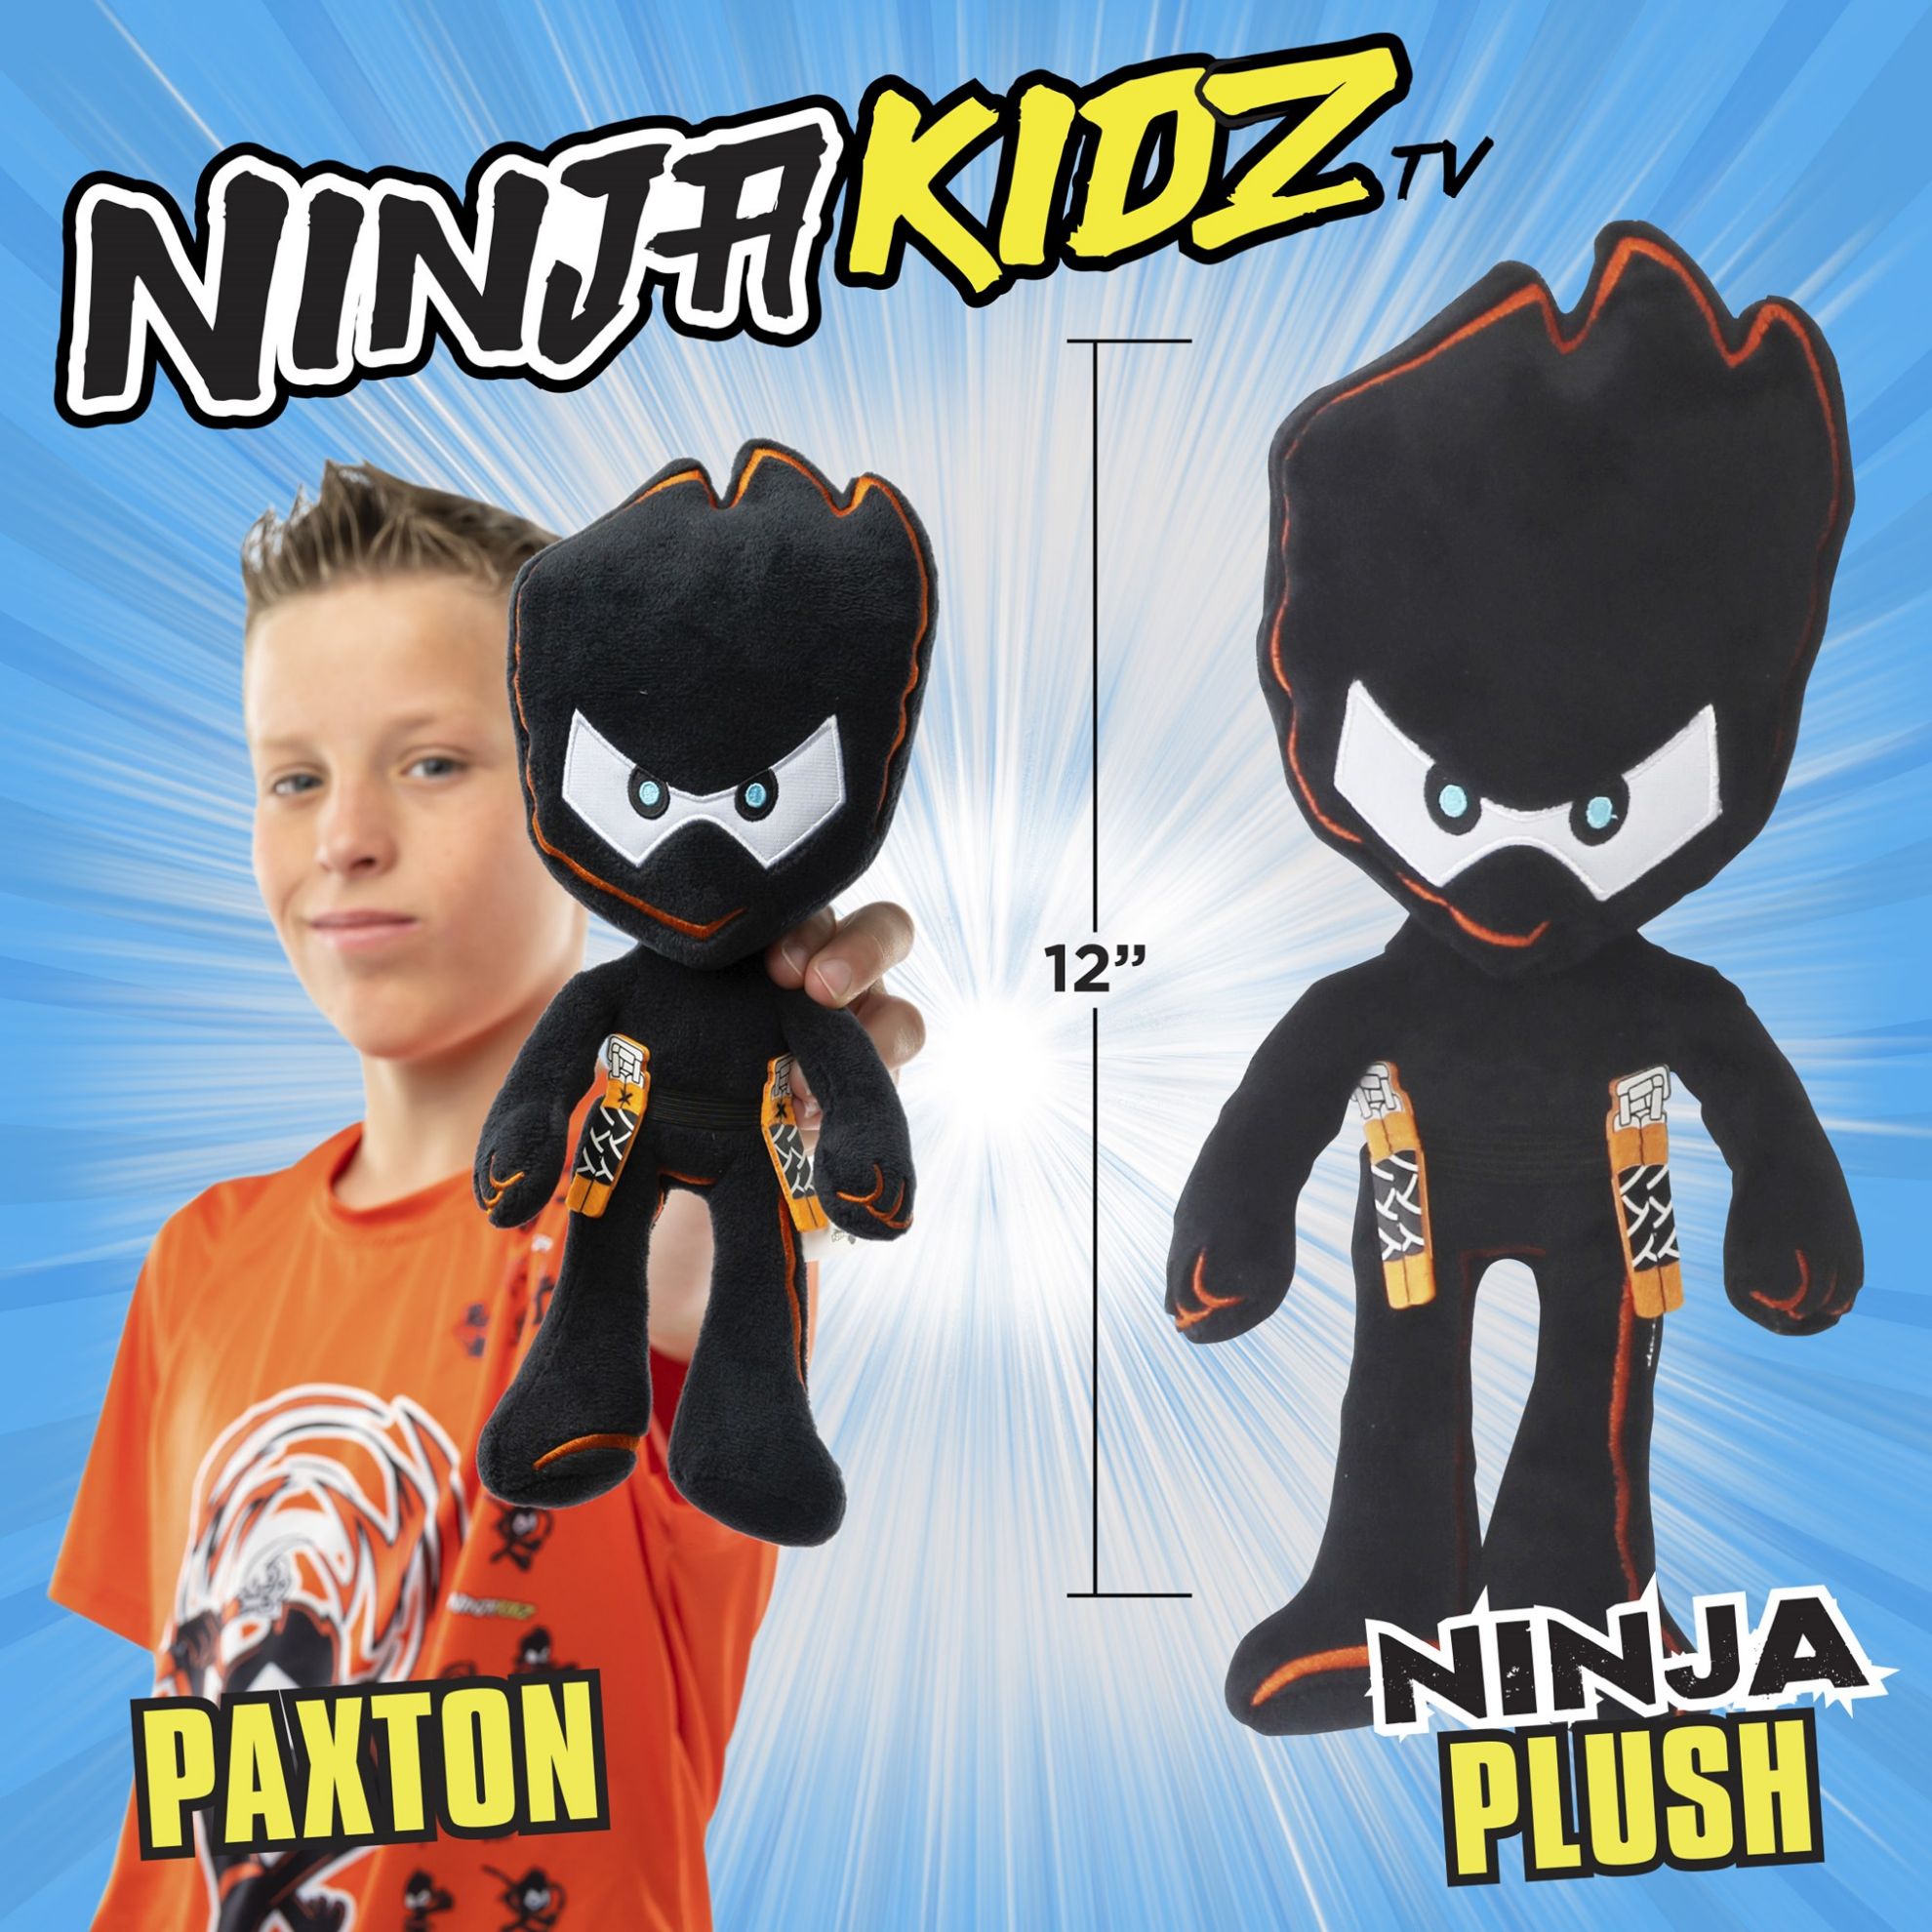 Ninja Kidz Plush - Paxton